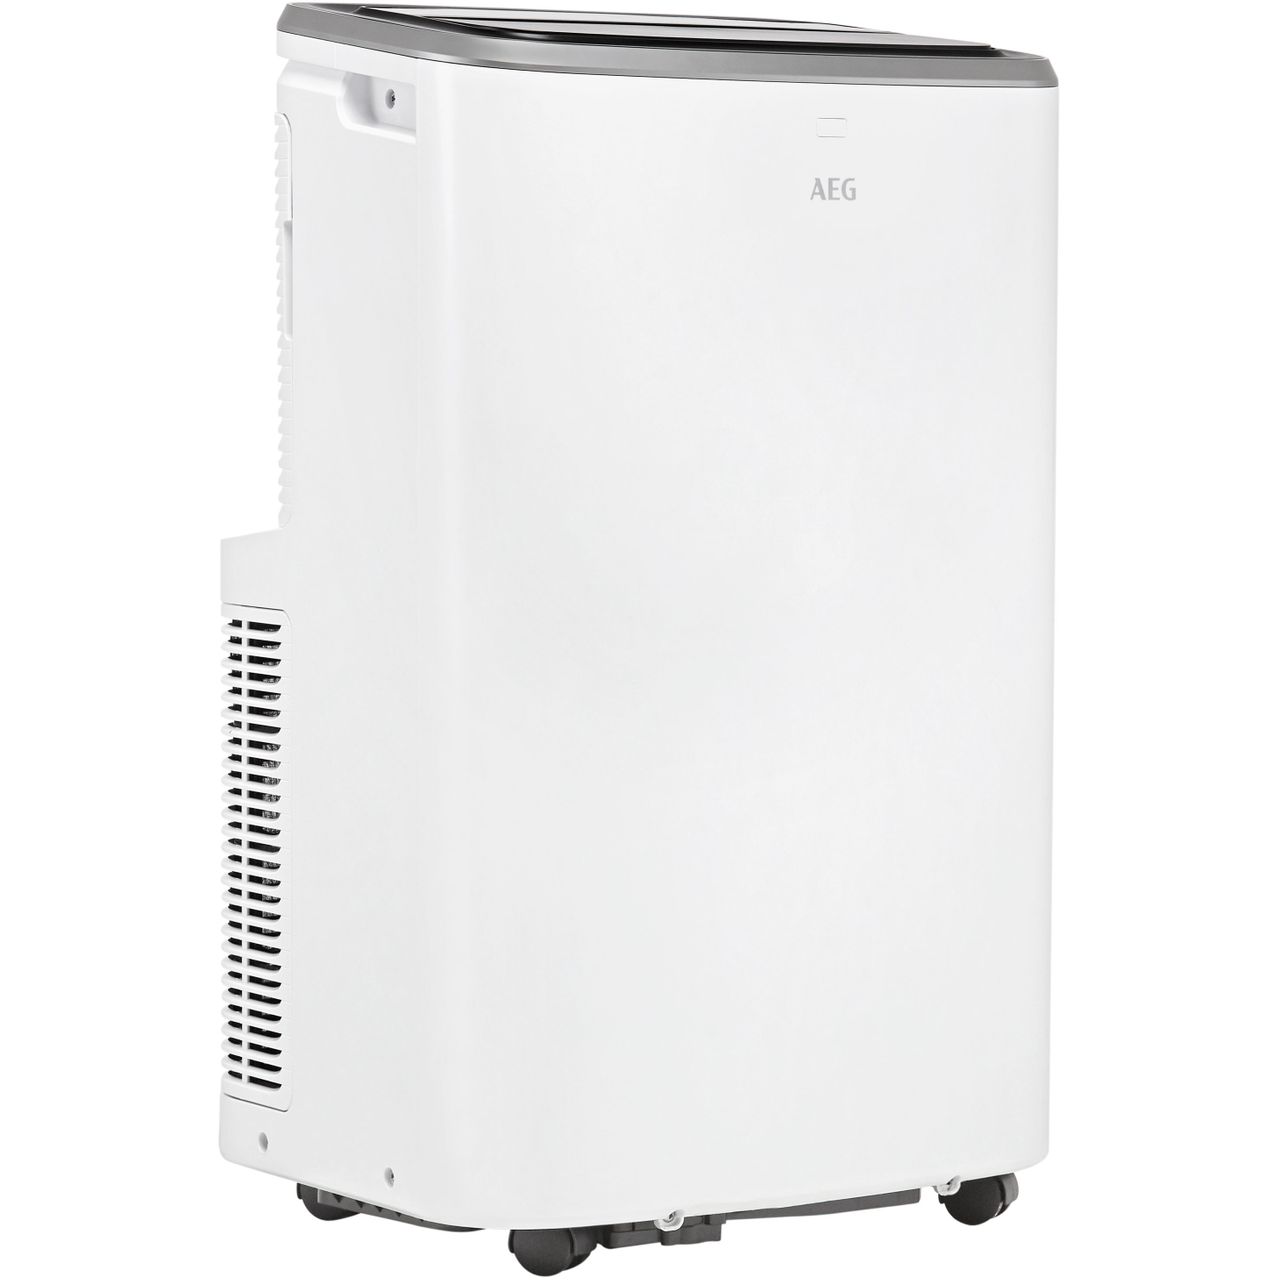 AEG ChillFlex Pro AXP26U558HW Air Conditioning Unit Review